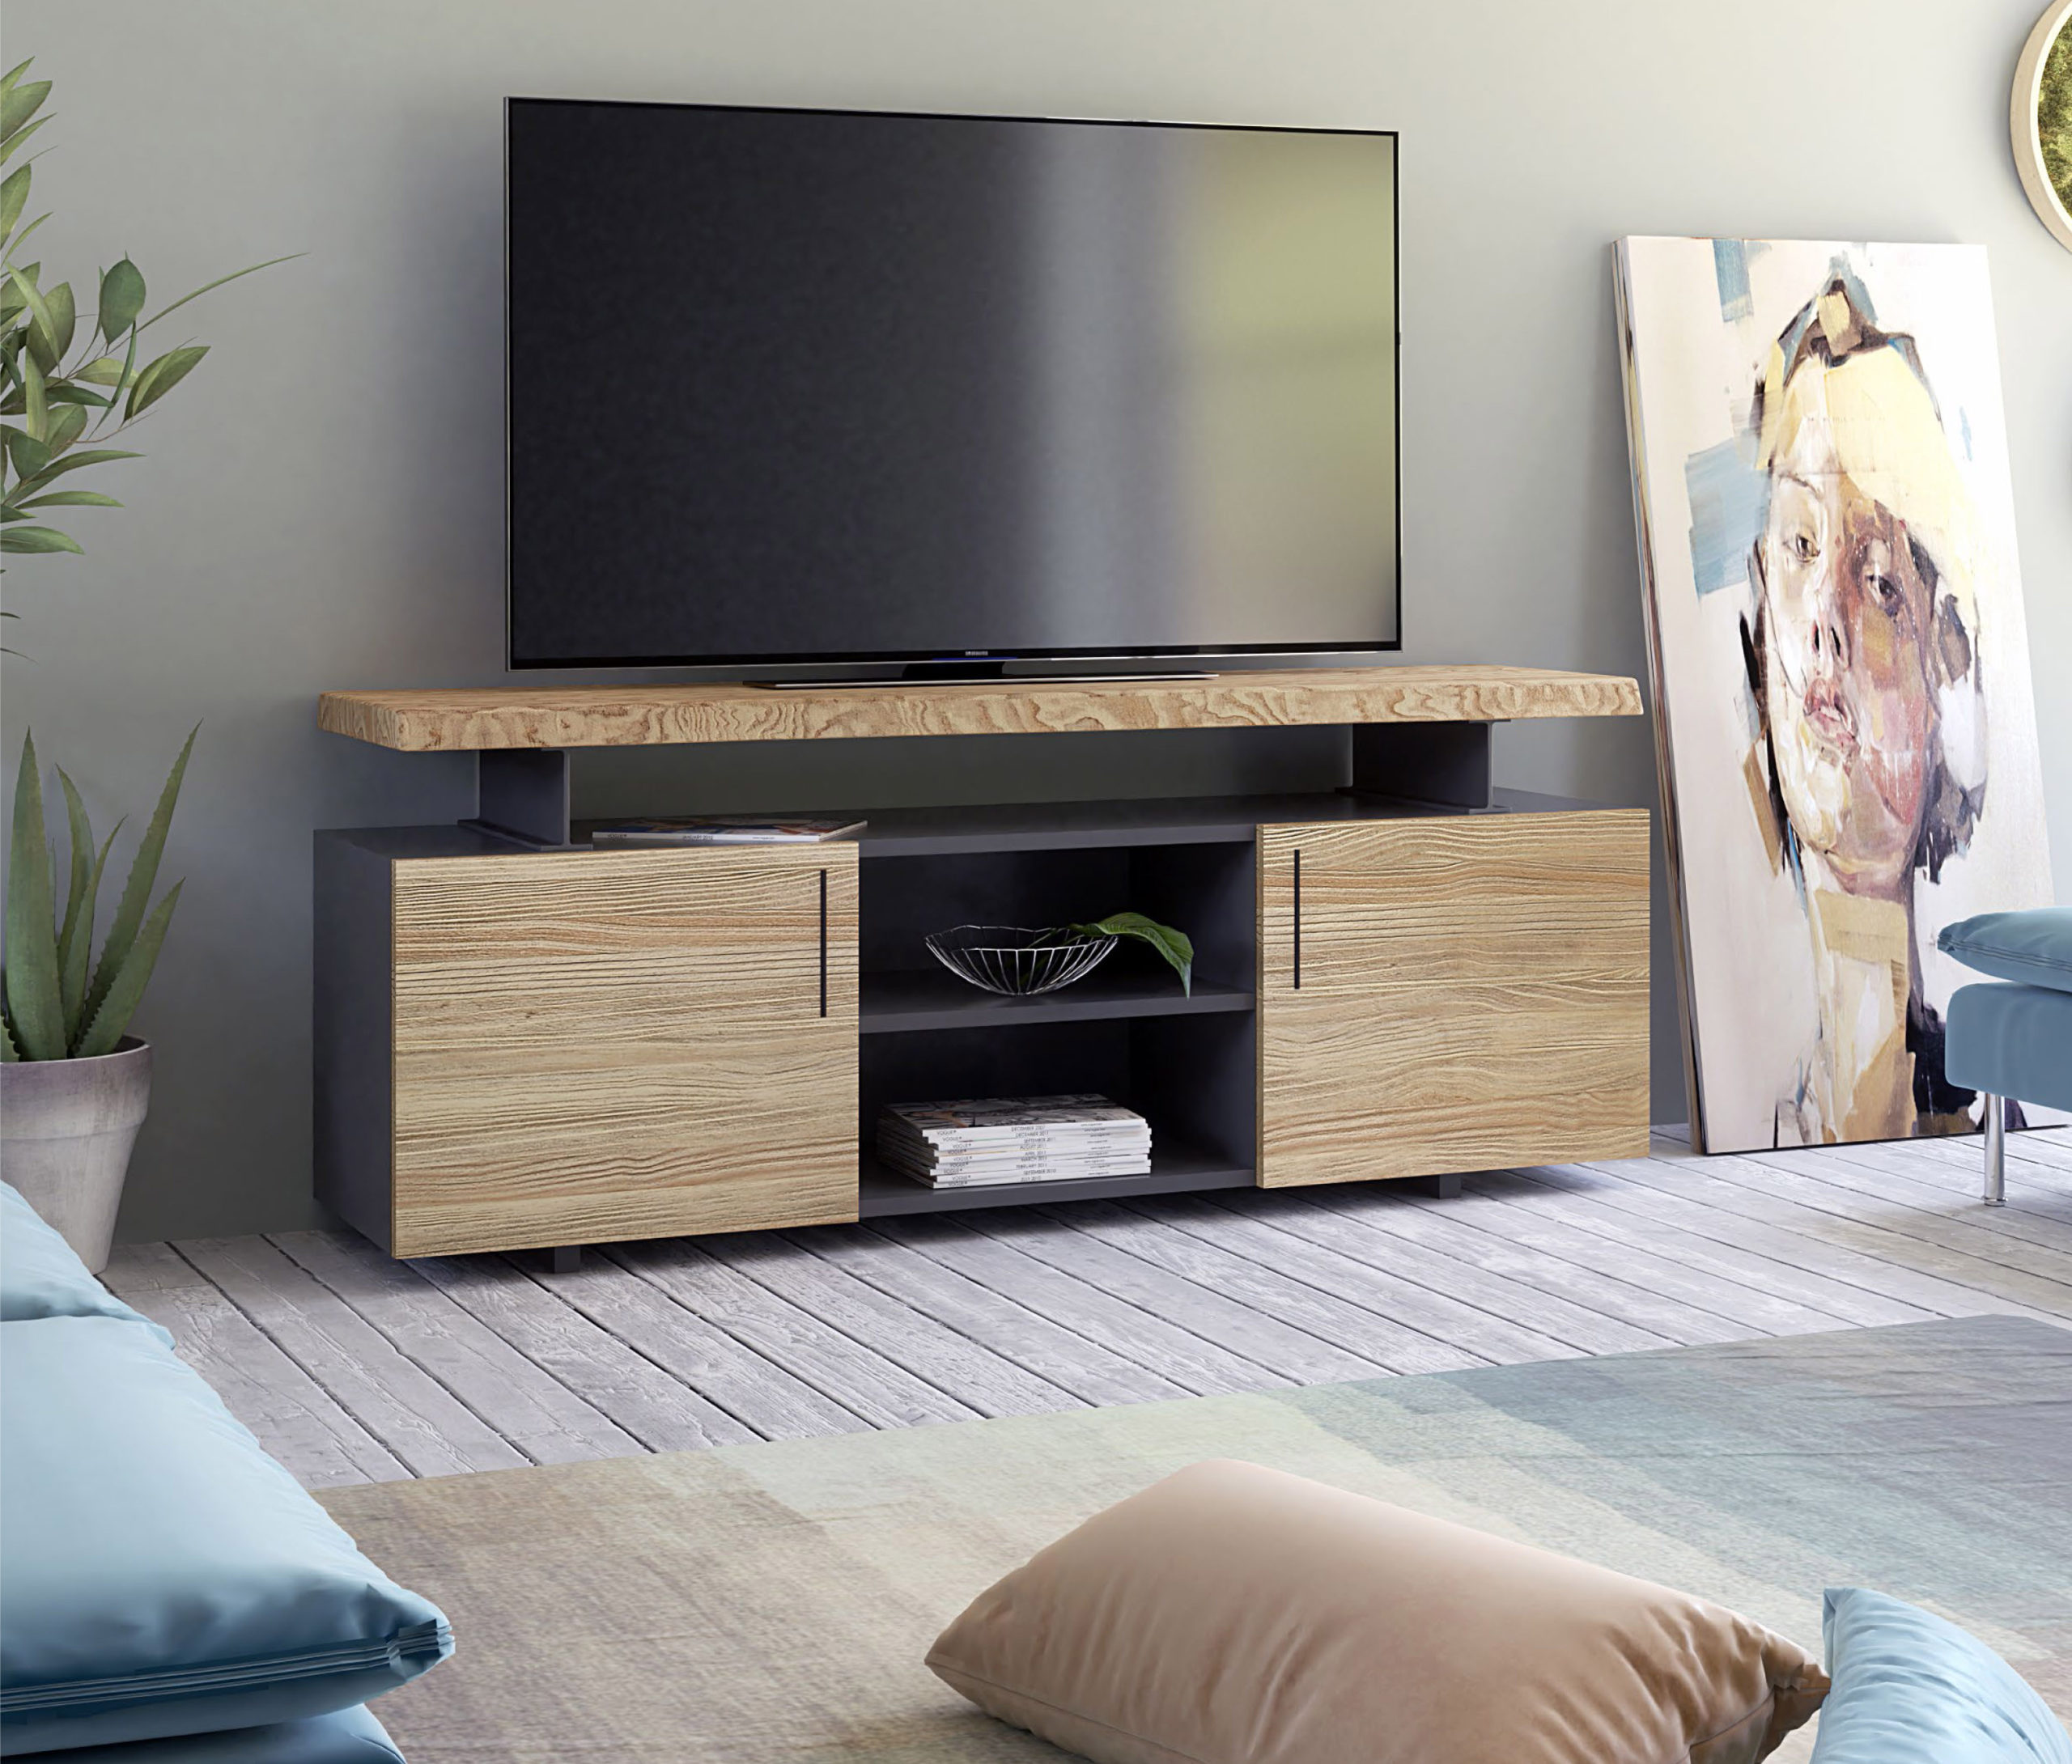 Mueble TV Modern - Muebles Polque - Venta Online - Madera Maciza